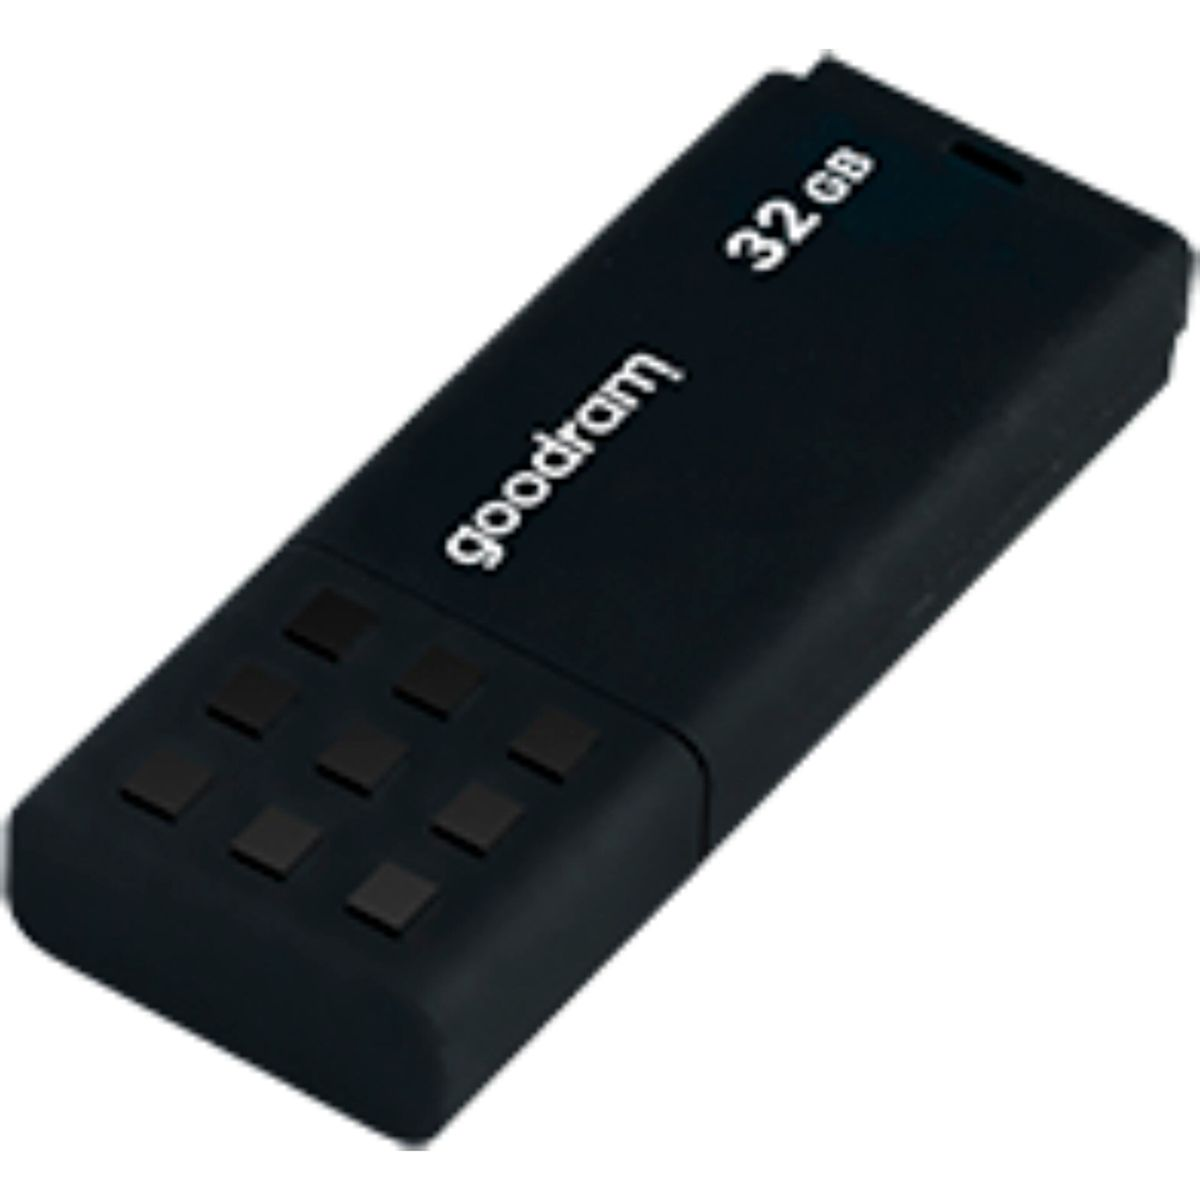 Stick Black 3.0 USB GB) 32GB GOODRAM USB (schwarz, UME3 32